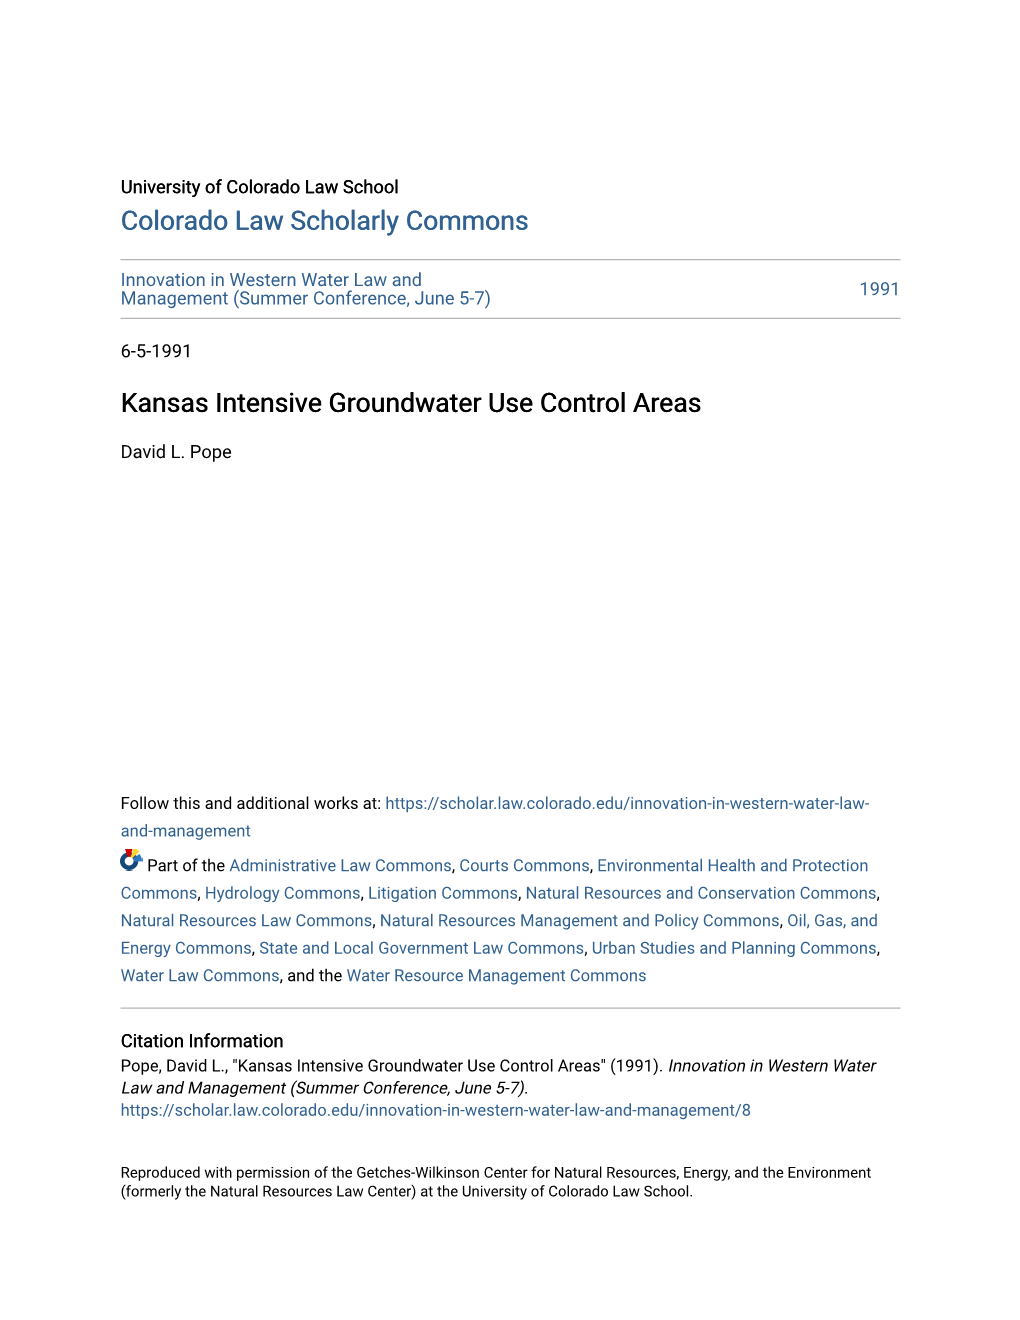 Kansas Intensive Groundwater Use Control Areas